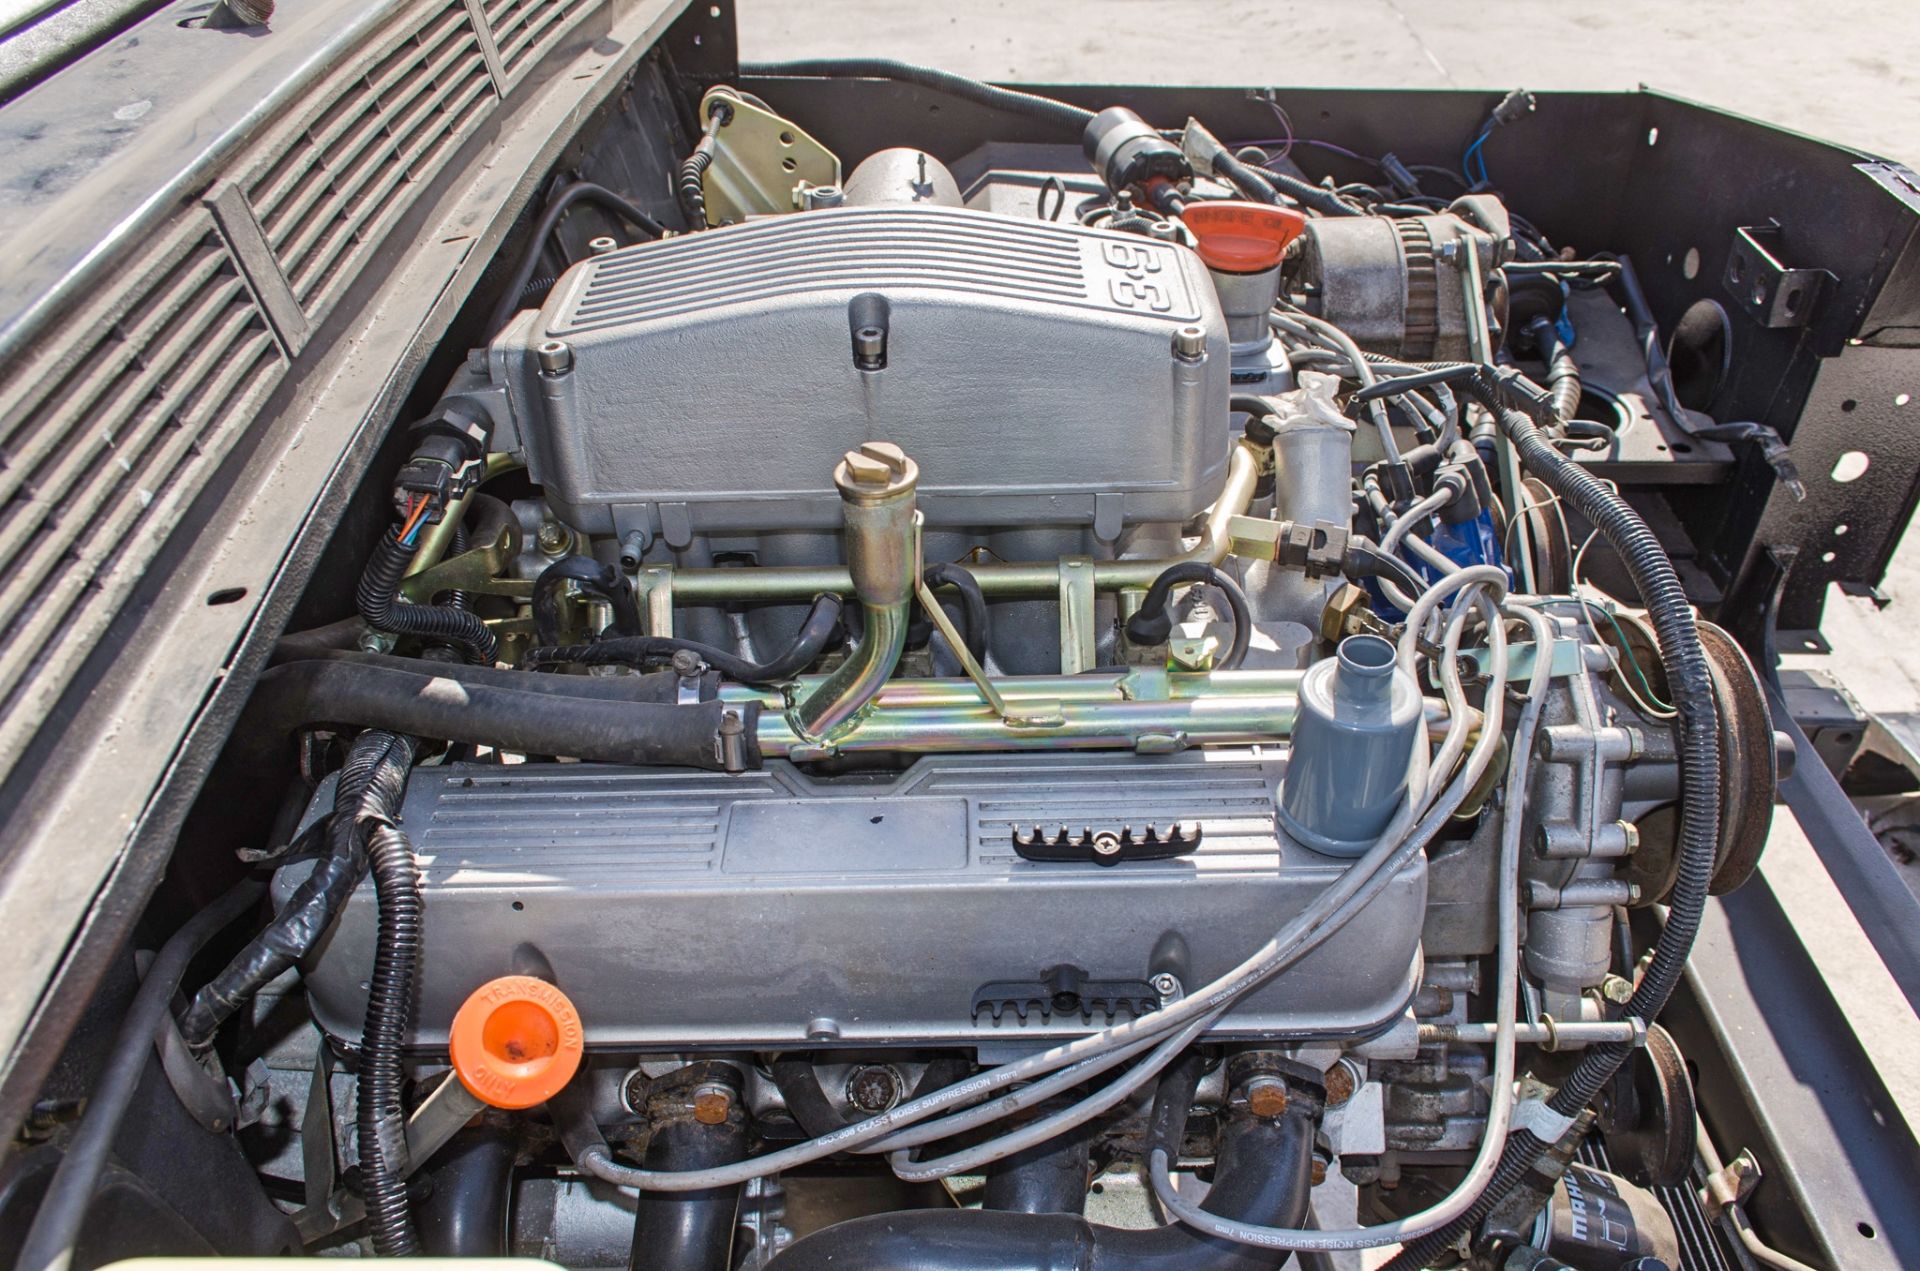 1991 Range Rover CSK 3.9 litre V8 3 door SUV - Image 52 of 60